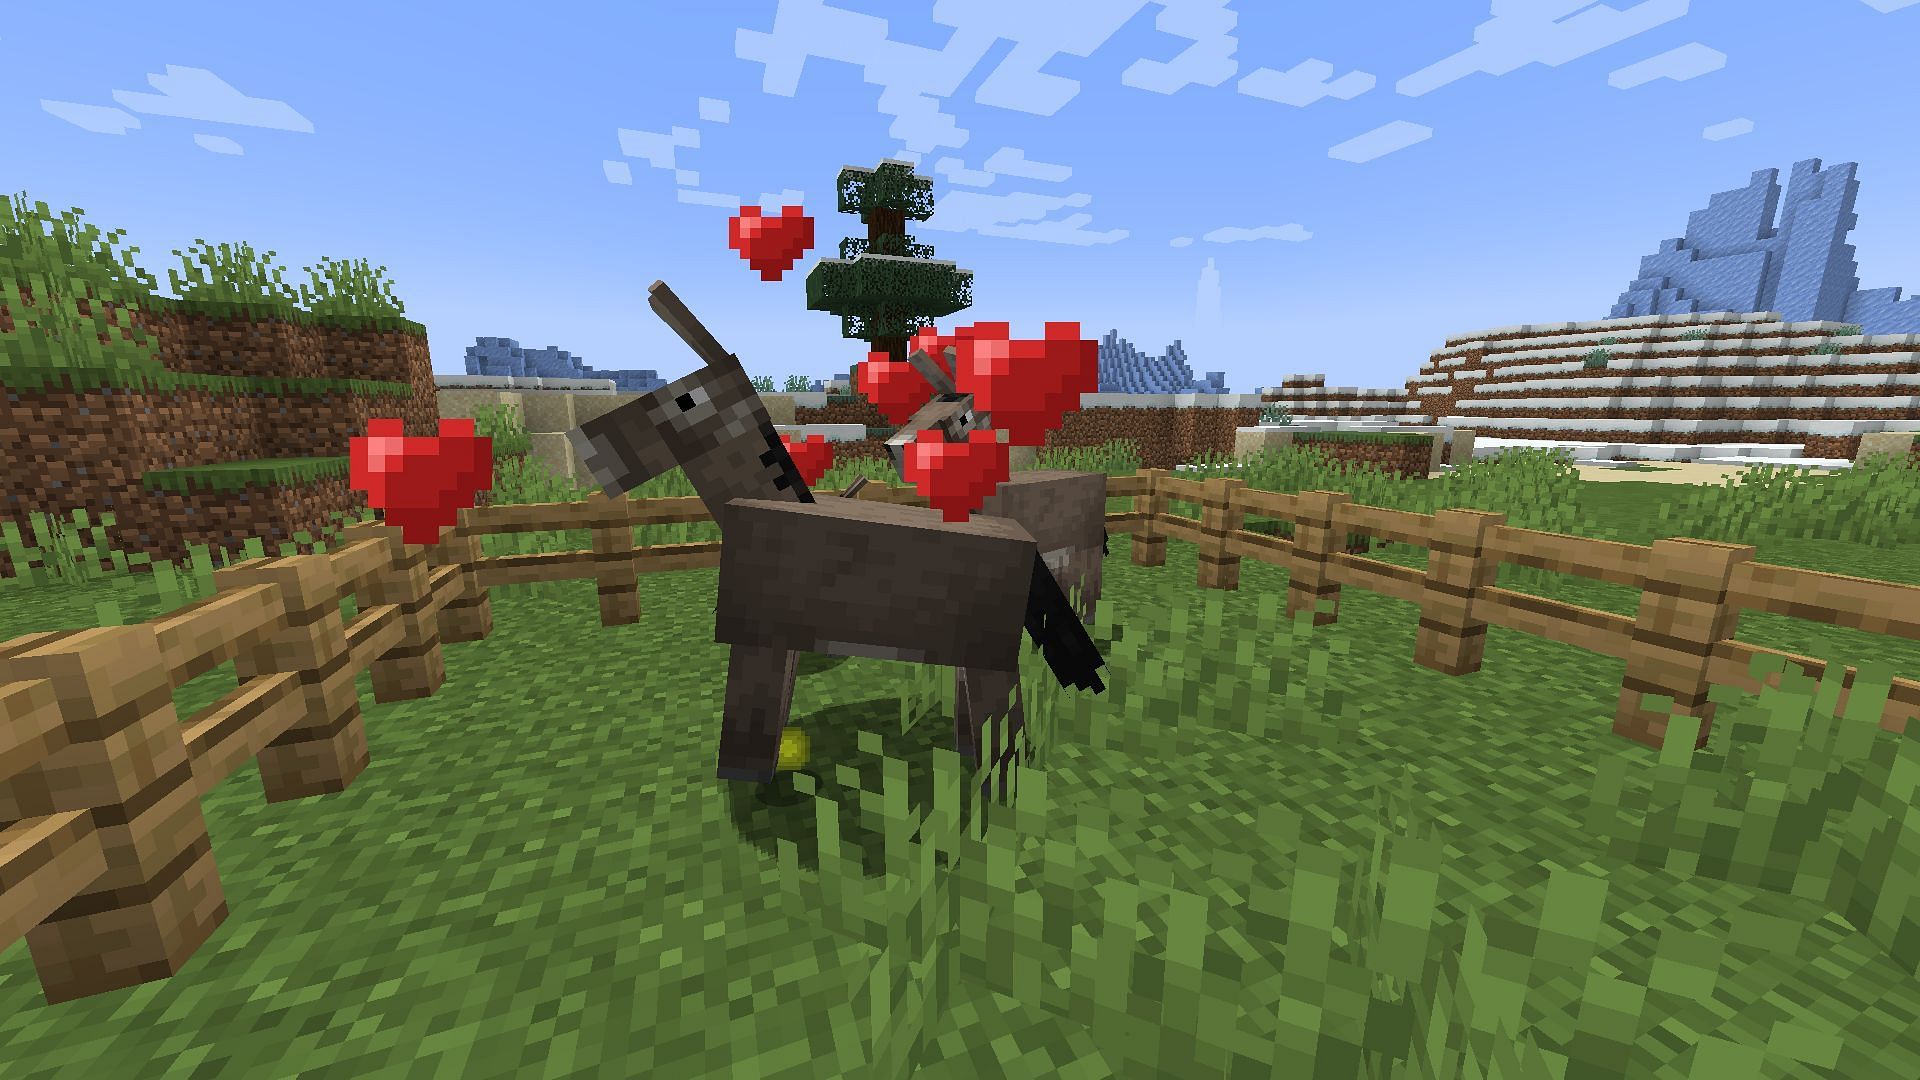 The mob entering love mode (Image via Minecraft)